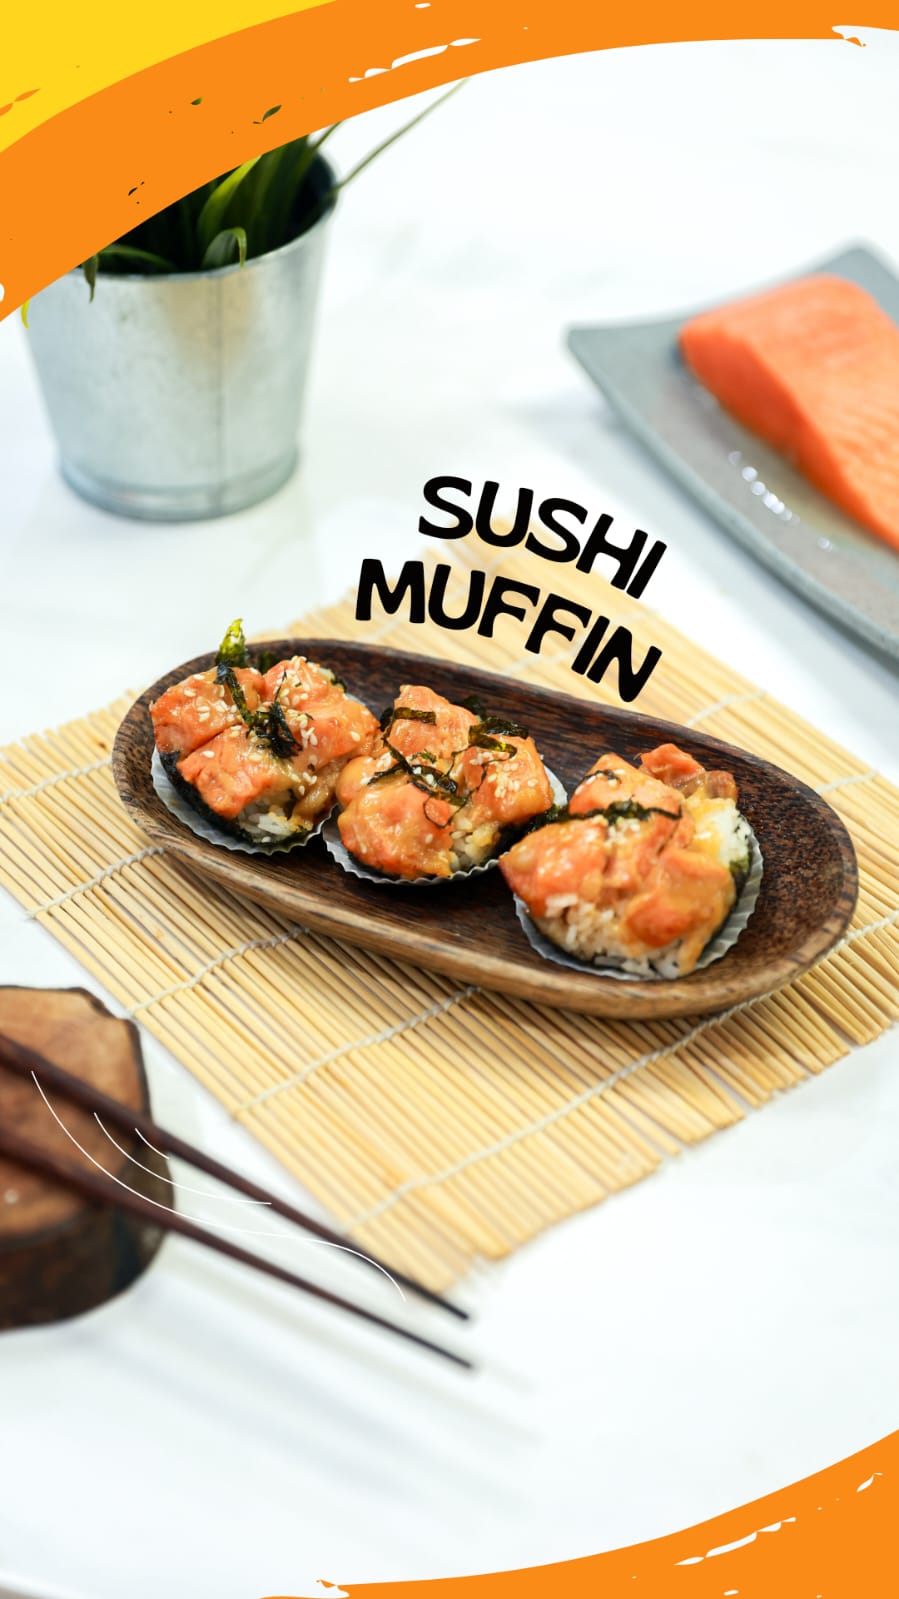 Resep Sushi Muffin, Praktis dan Mudah!